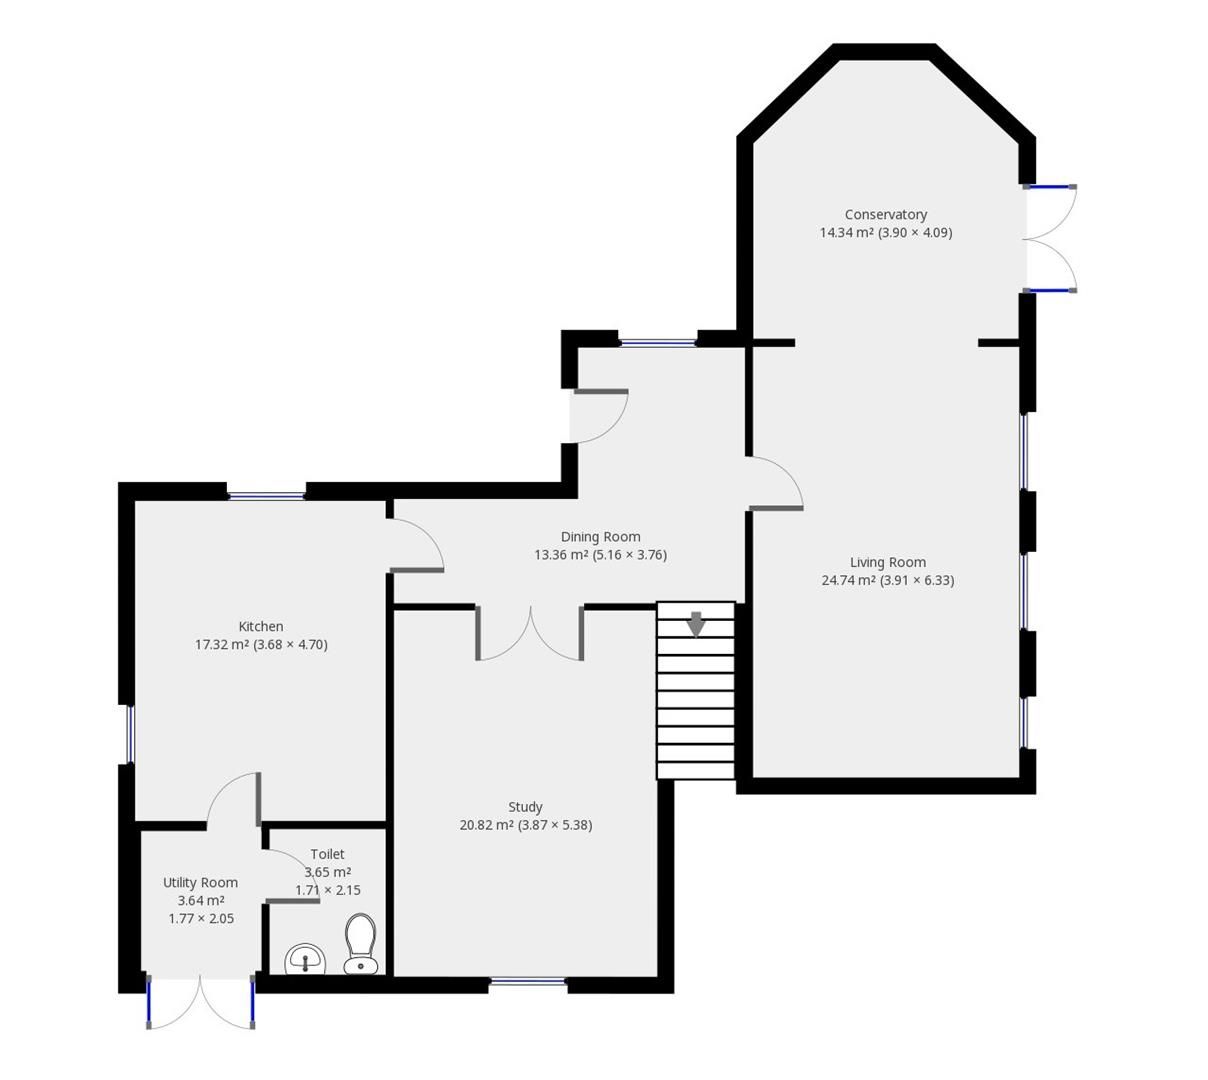 3 bed  for sale - Property Floorplan